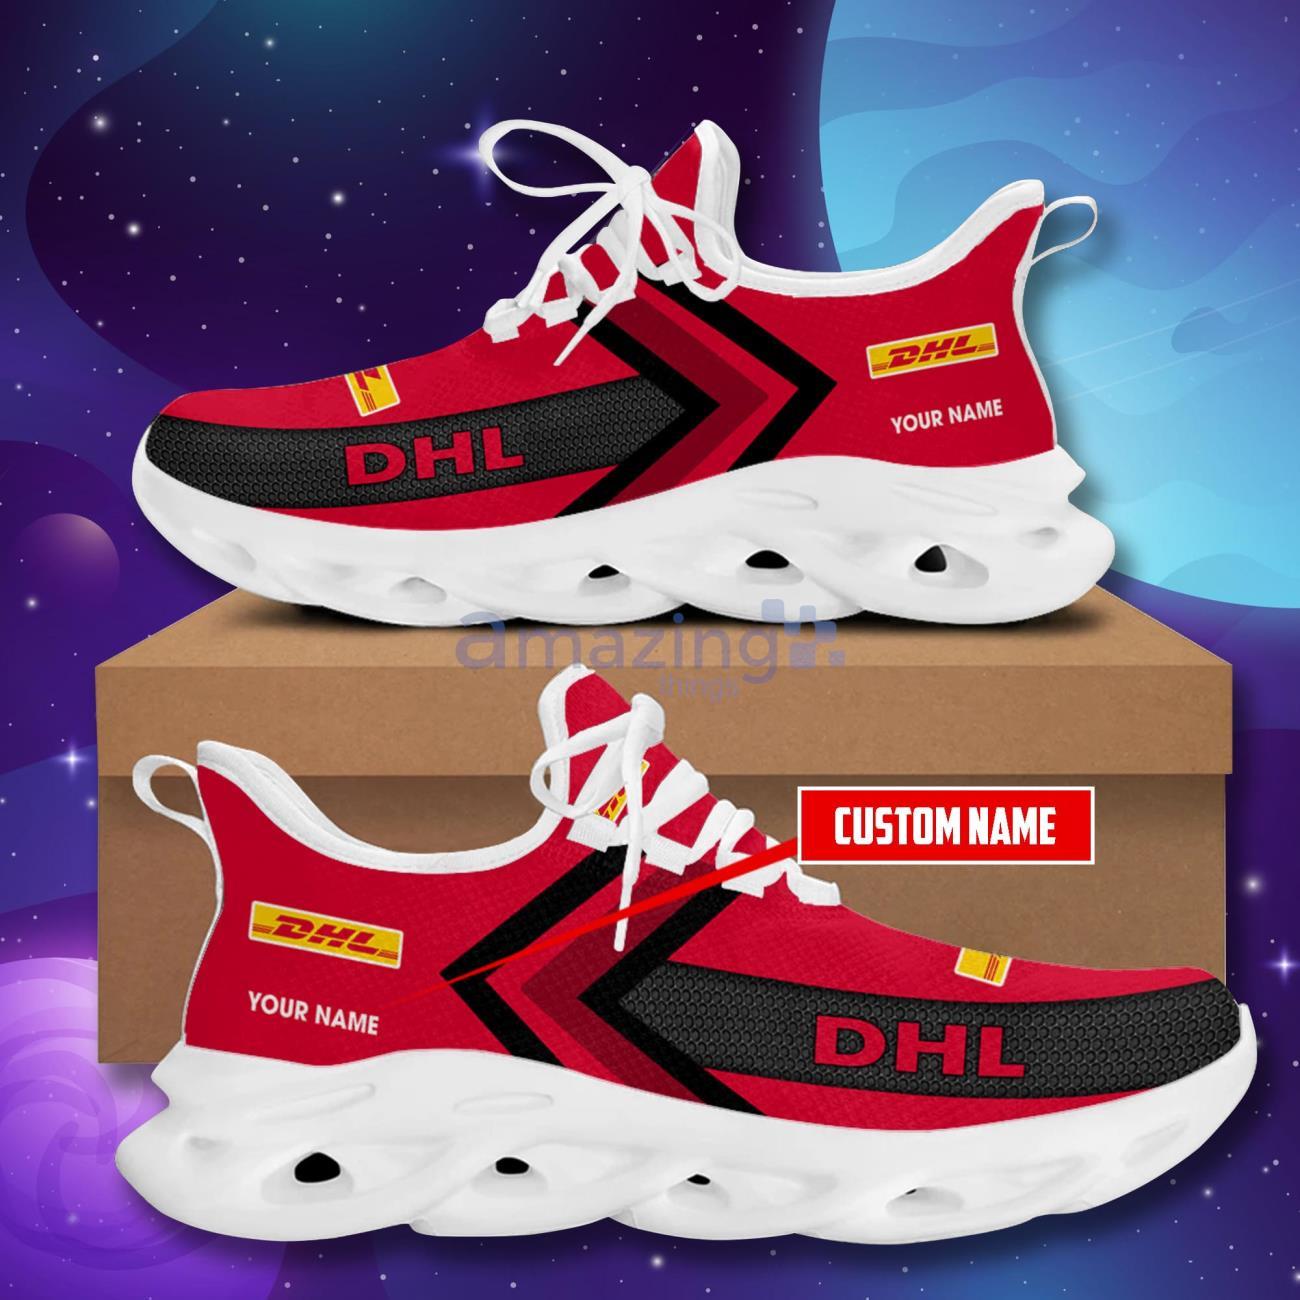 Custom Name Dhl Max Soul Shoes Men And Women Running Sneakers